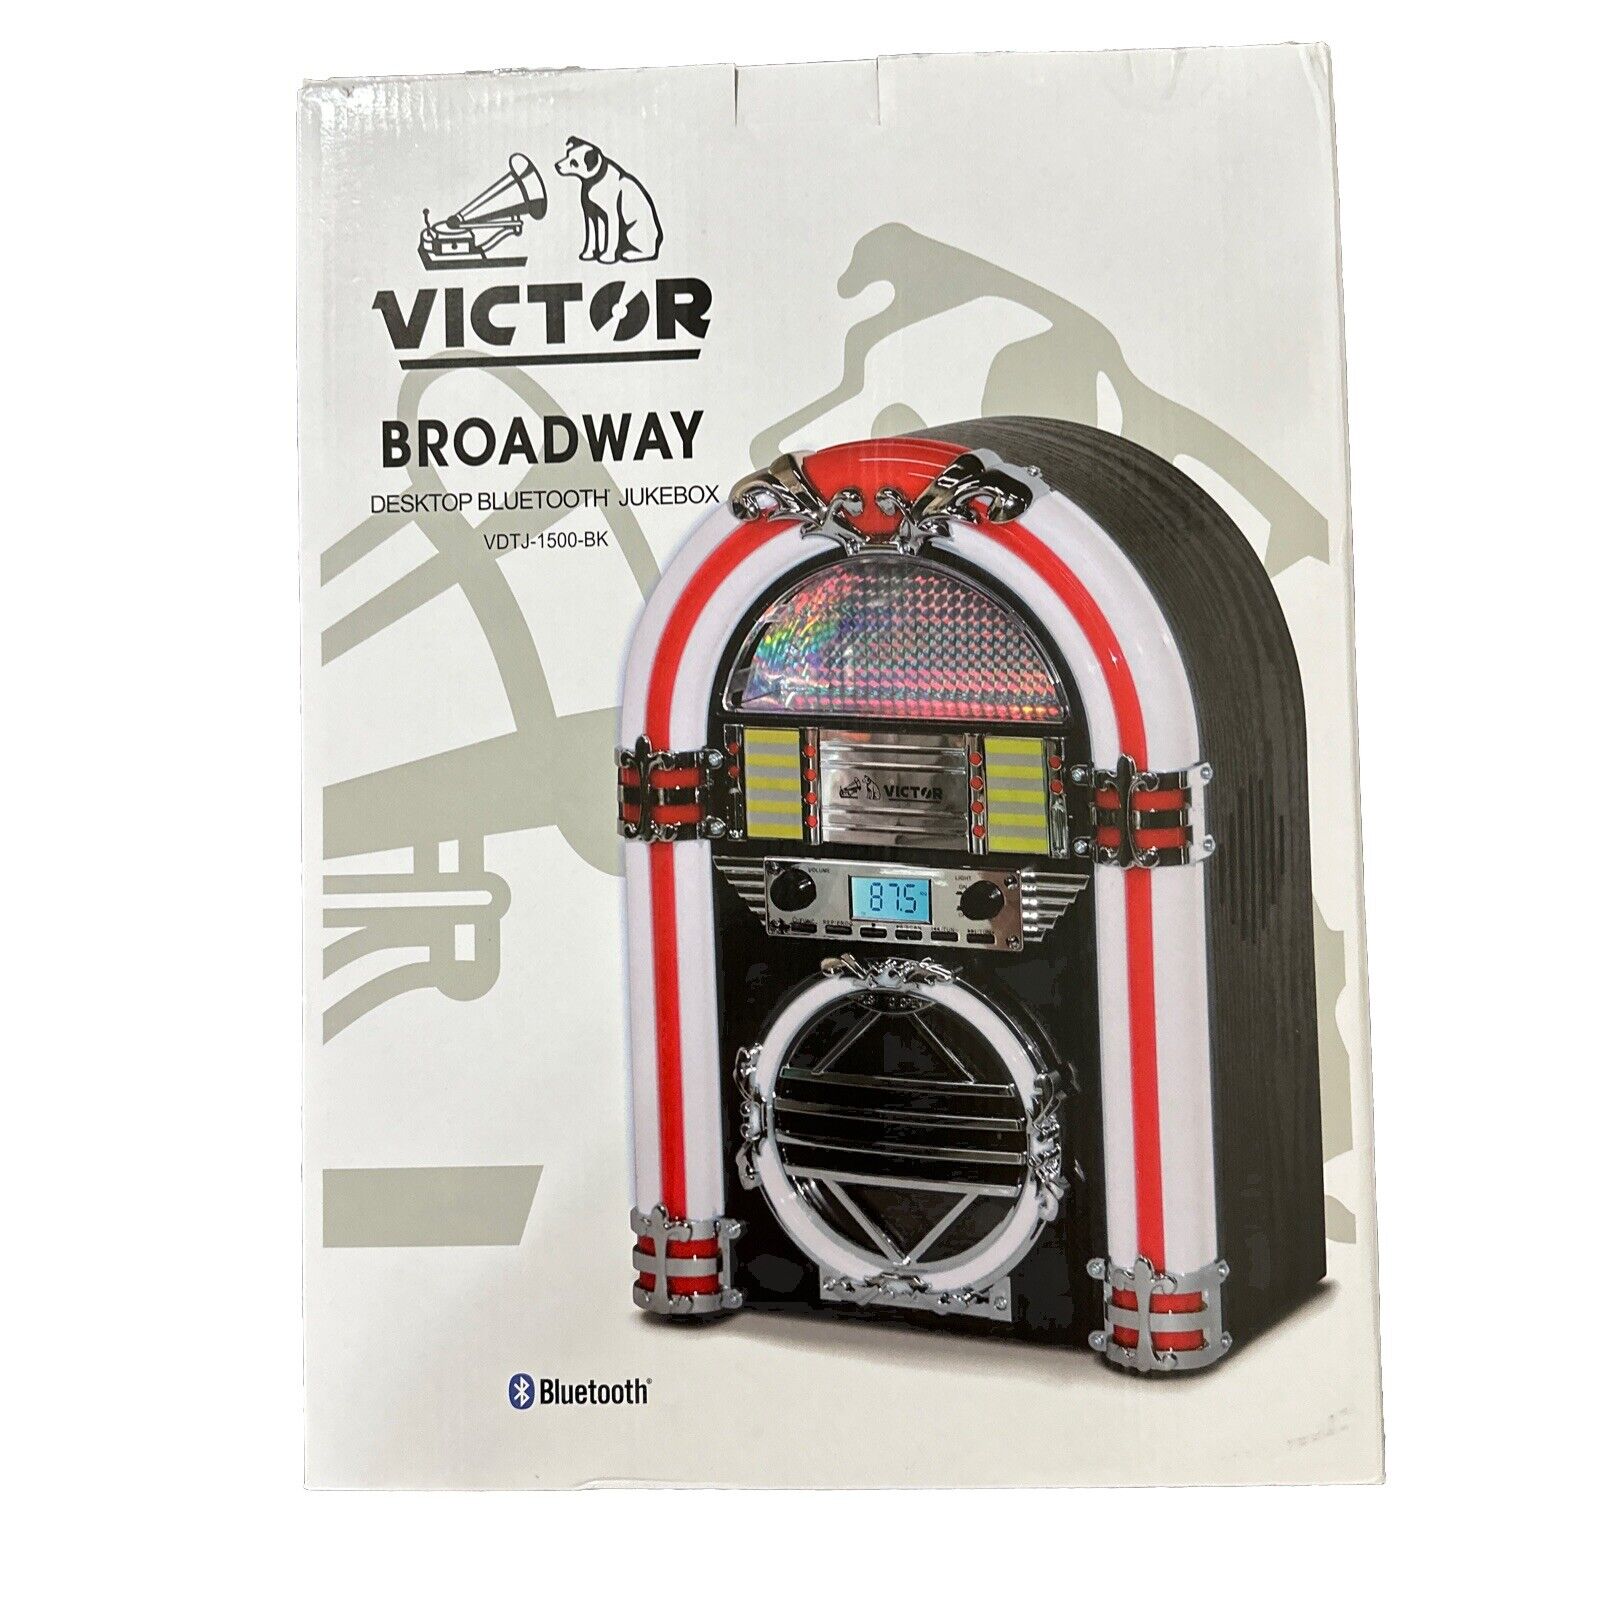 [New] Victor Broadway Desktop Bluetooth Jukebox With CD Player